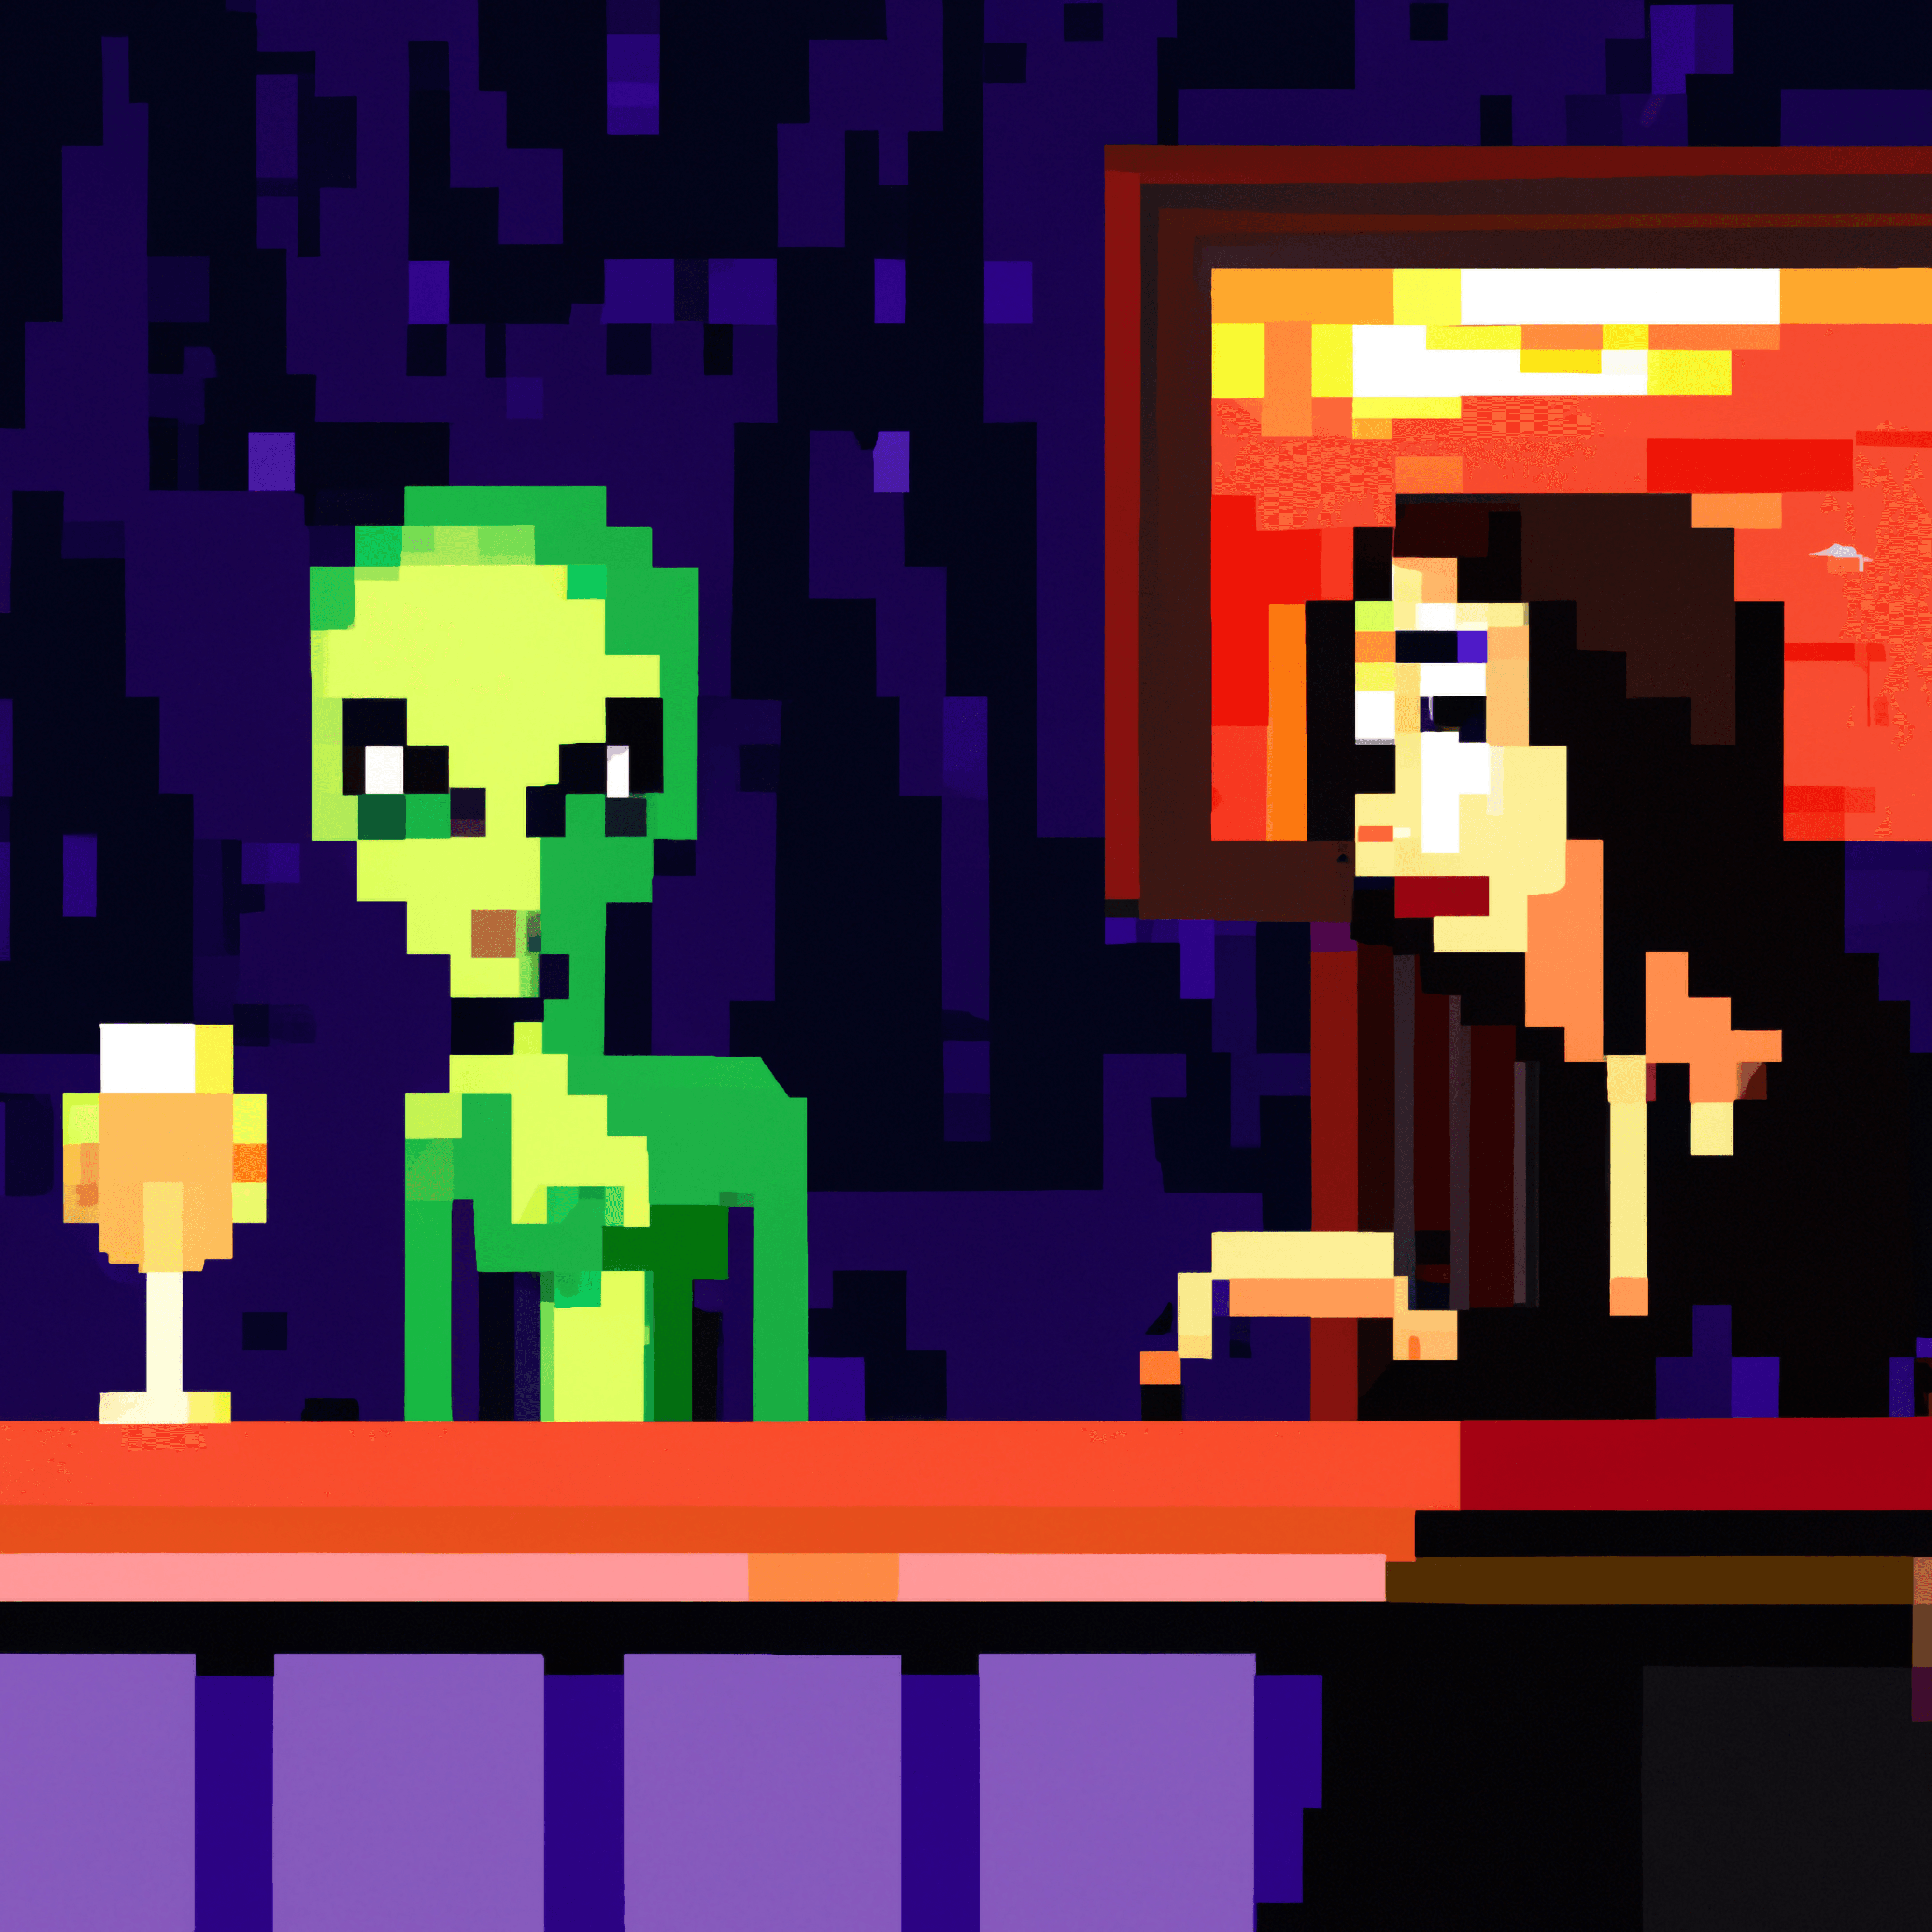 Mona Lisa Meets an Alien in a Bar #2: Small Talk